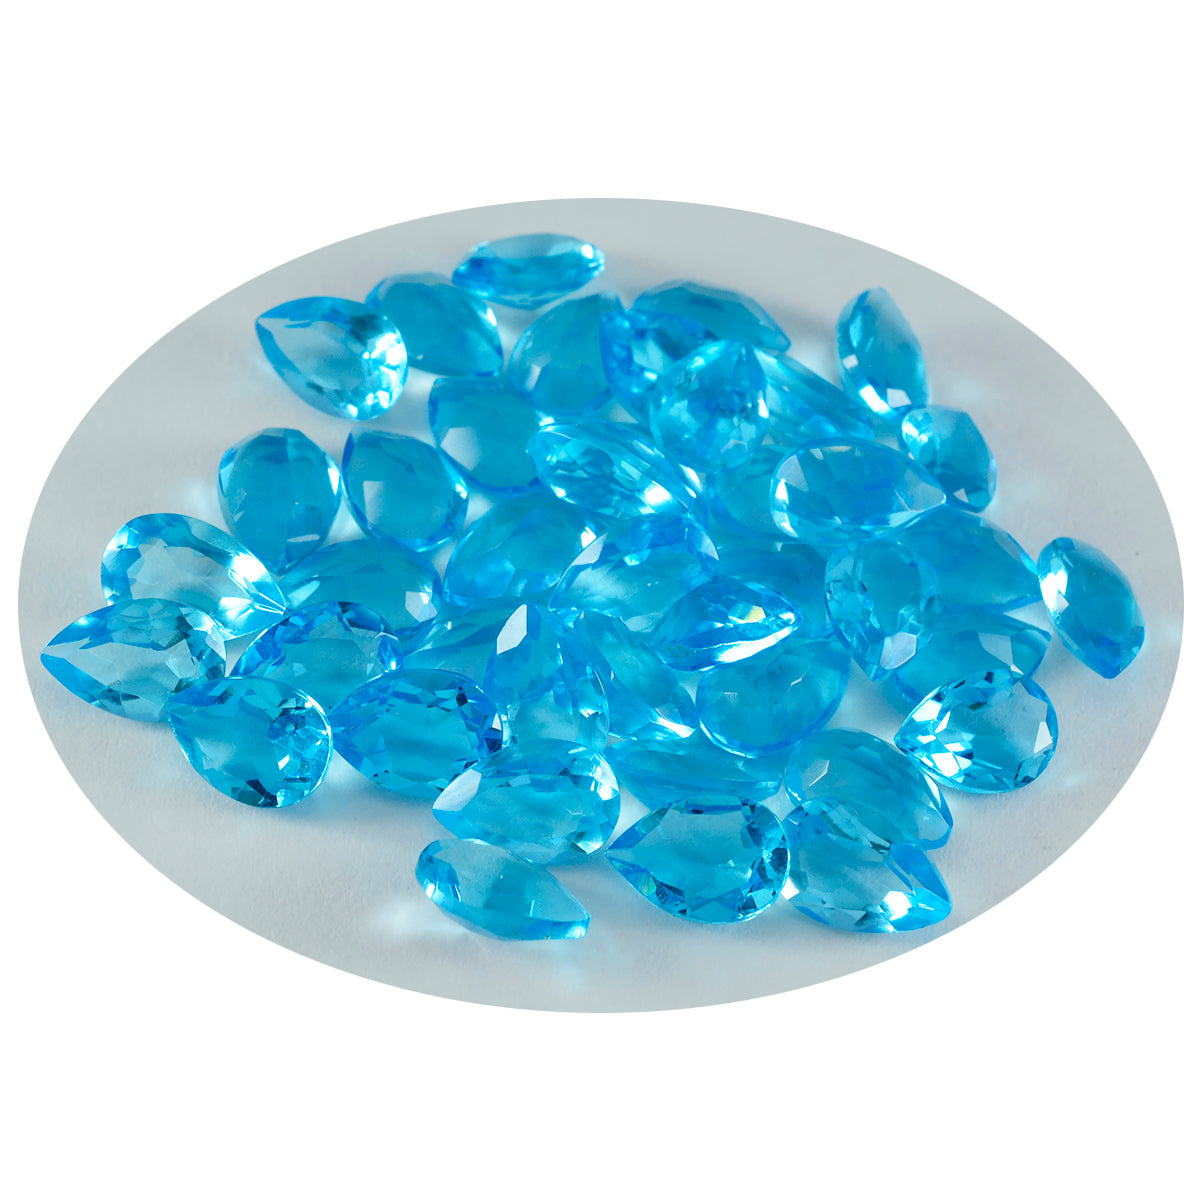 Riyogems 1PC Blue Topaz CZ Faceted 5x7 mm Pear Shape astonishing Quality Gemstone